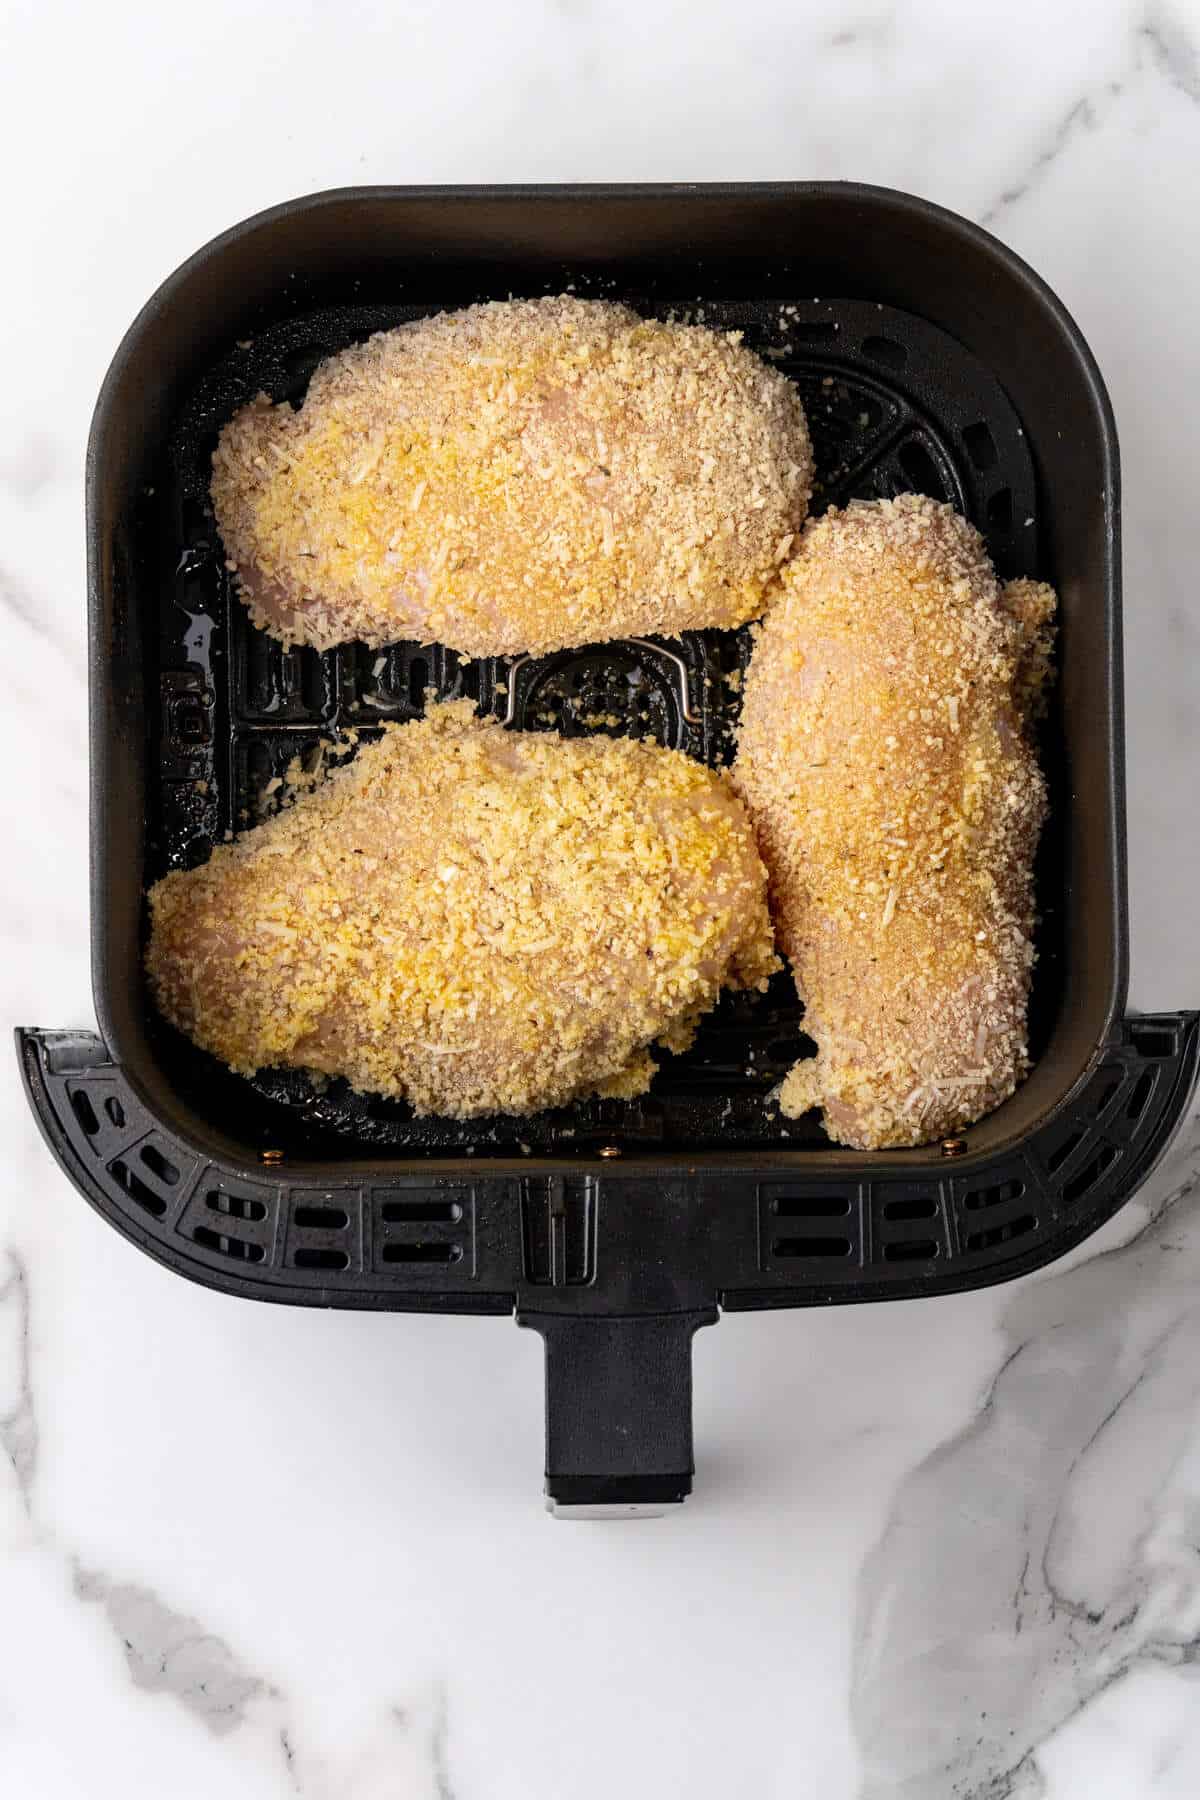 Three breaded Chicken Parmesan breasts in an air fryer basket.